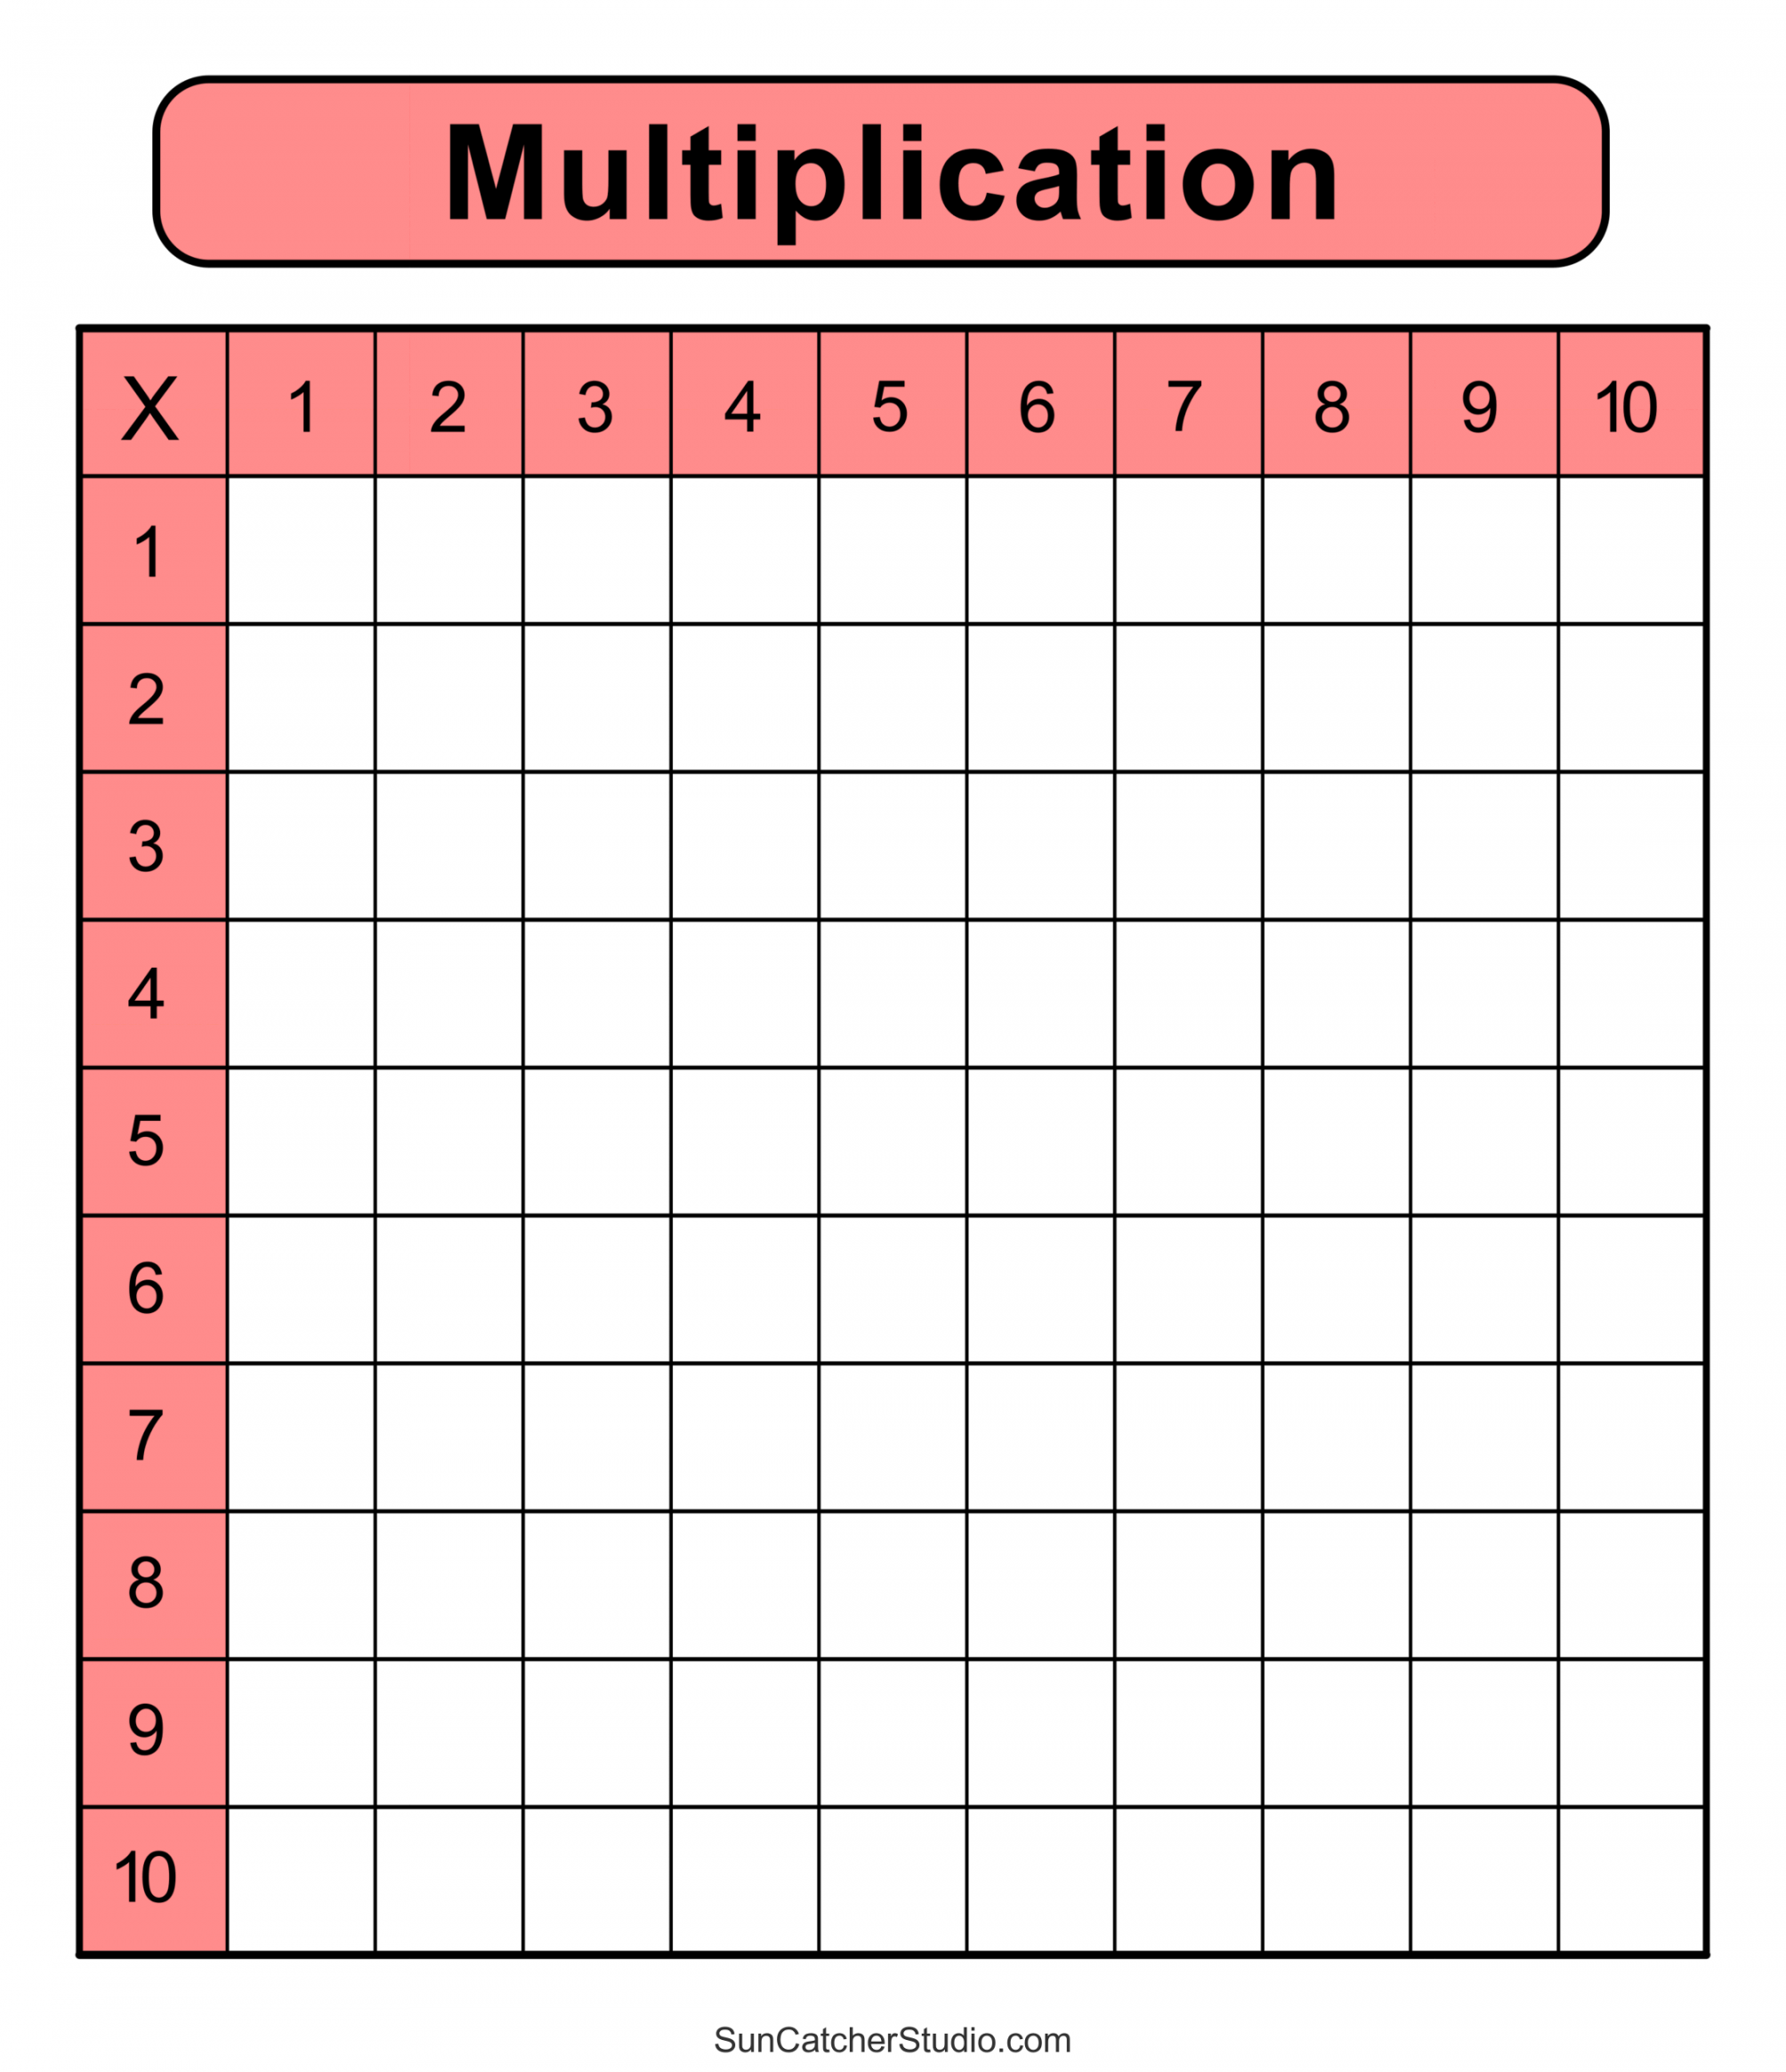 Multiplication Charts (PDF): Free Printable Times Tables – DIY  - FREE Printables - Blank Mulitplication Chart